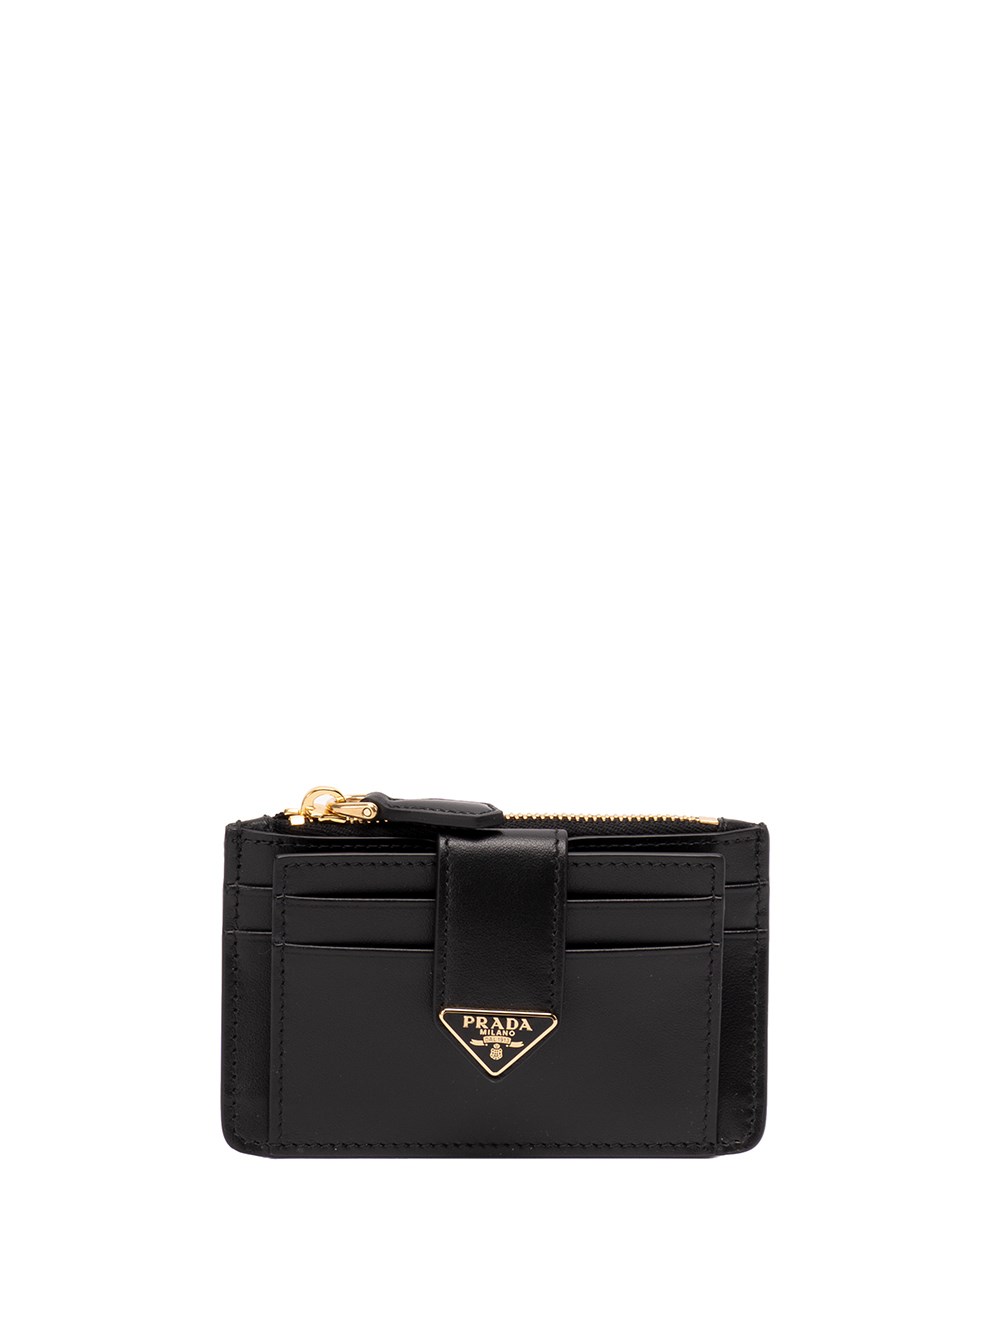 Prada, Bags, Nwt Prada Brushed Leather Card Holder With Shoulder Strap